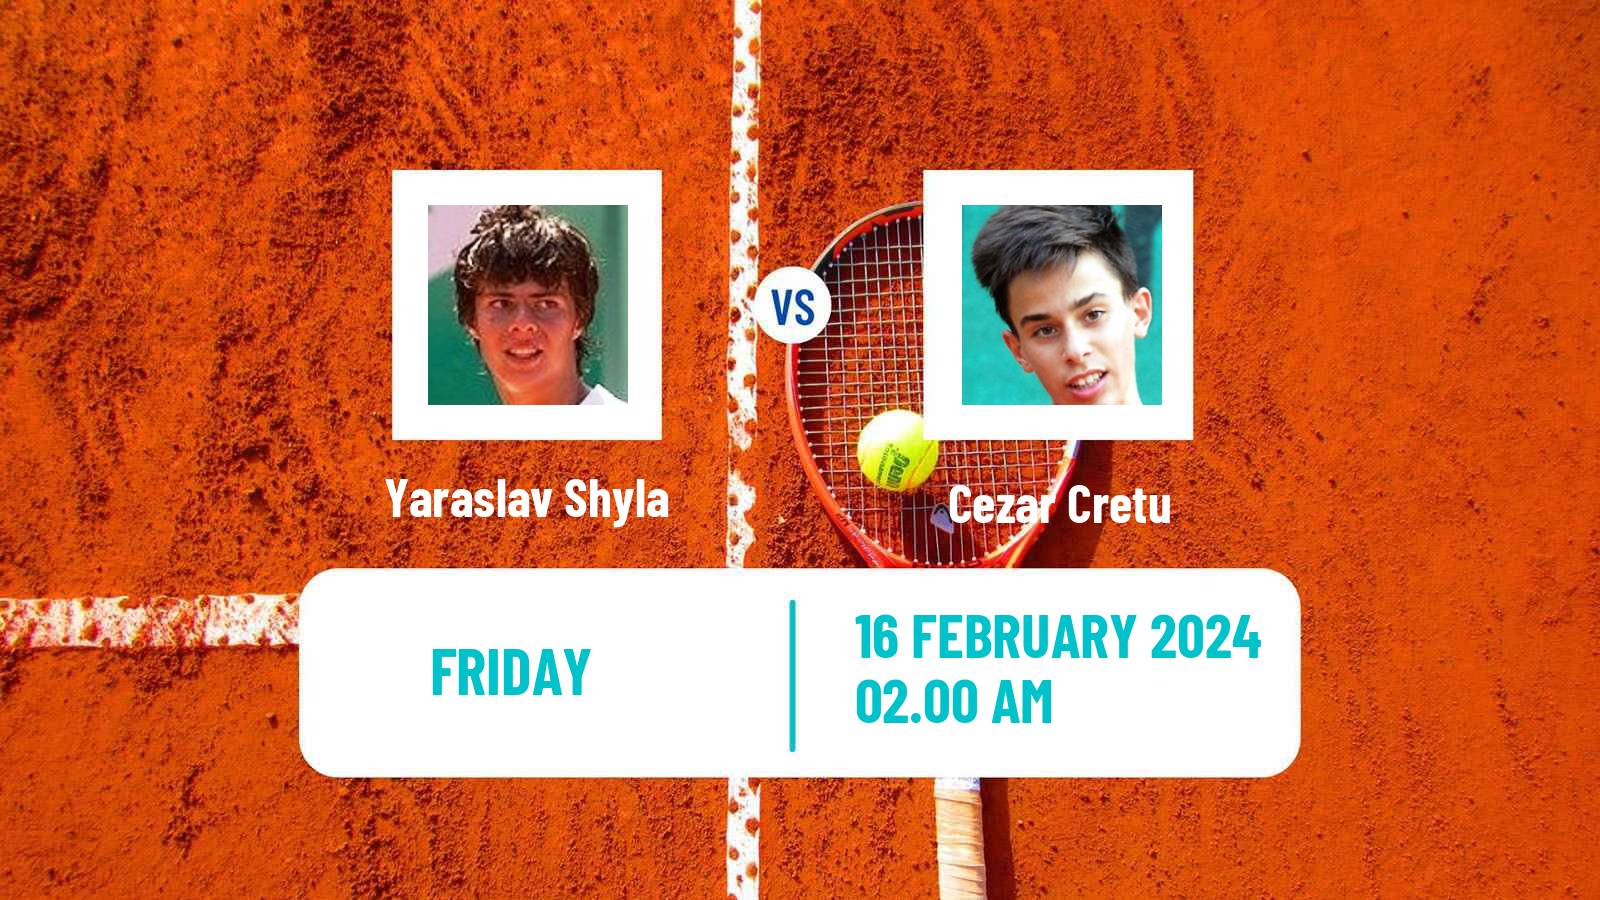 Tennis ITF M25 Antalya 3 Men Yaraslav Shyla - Cezar Cretu